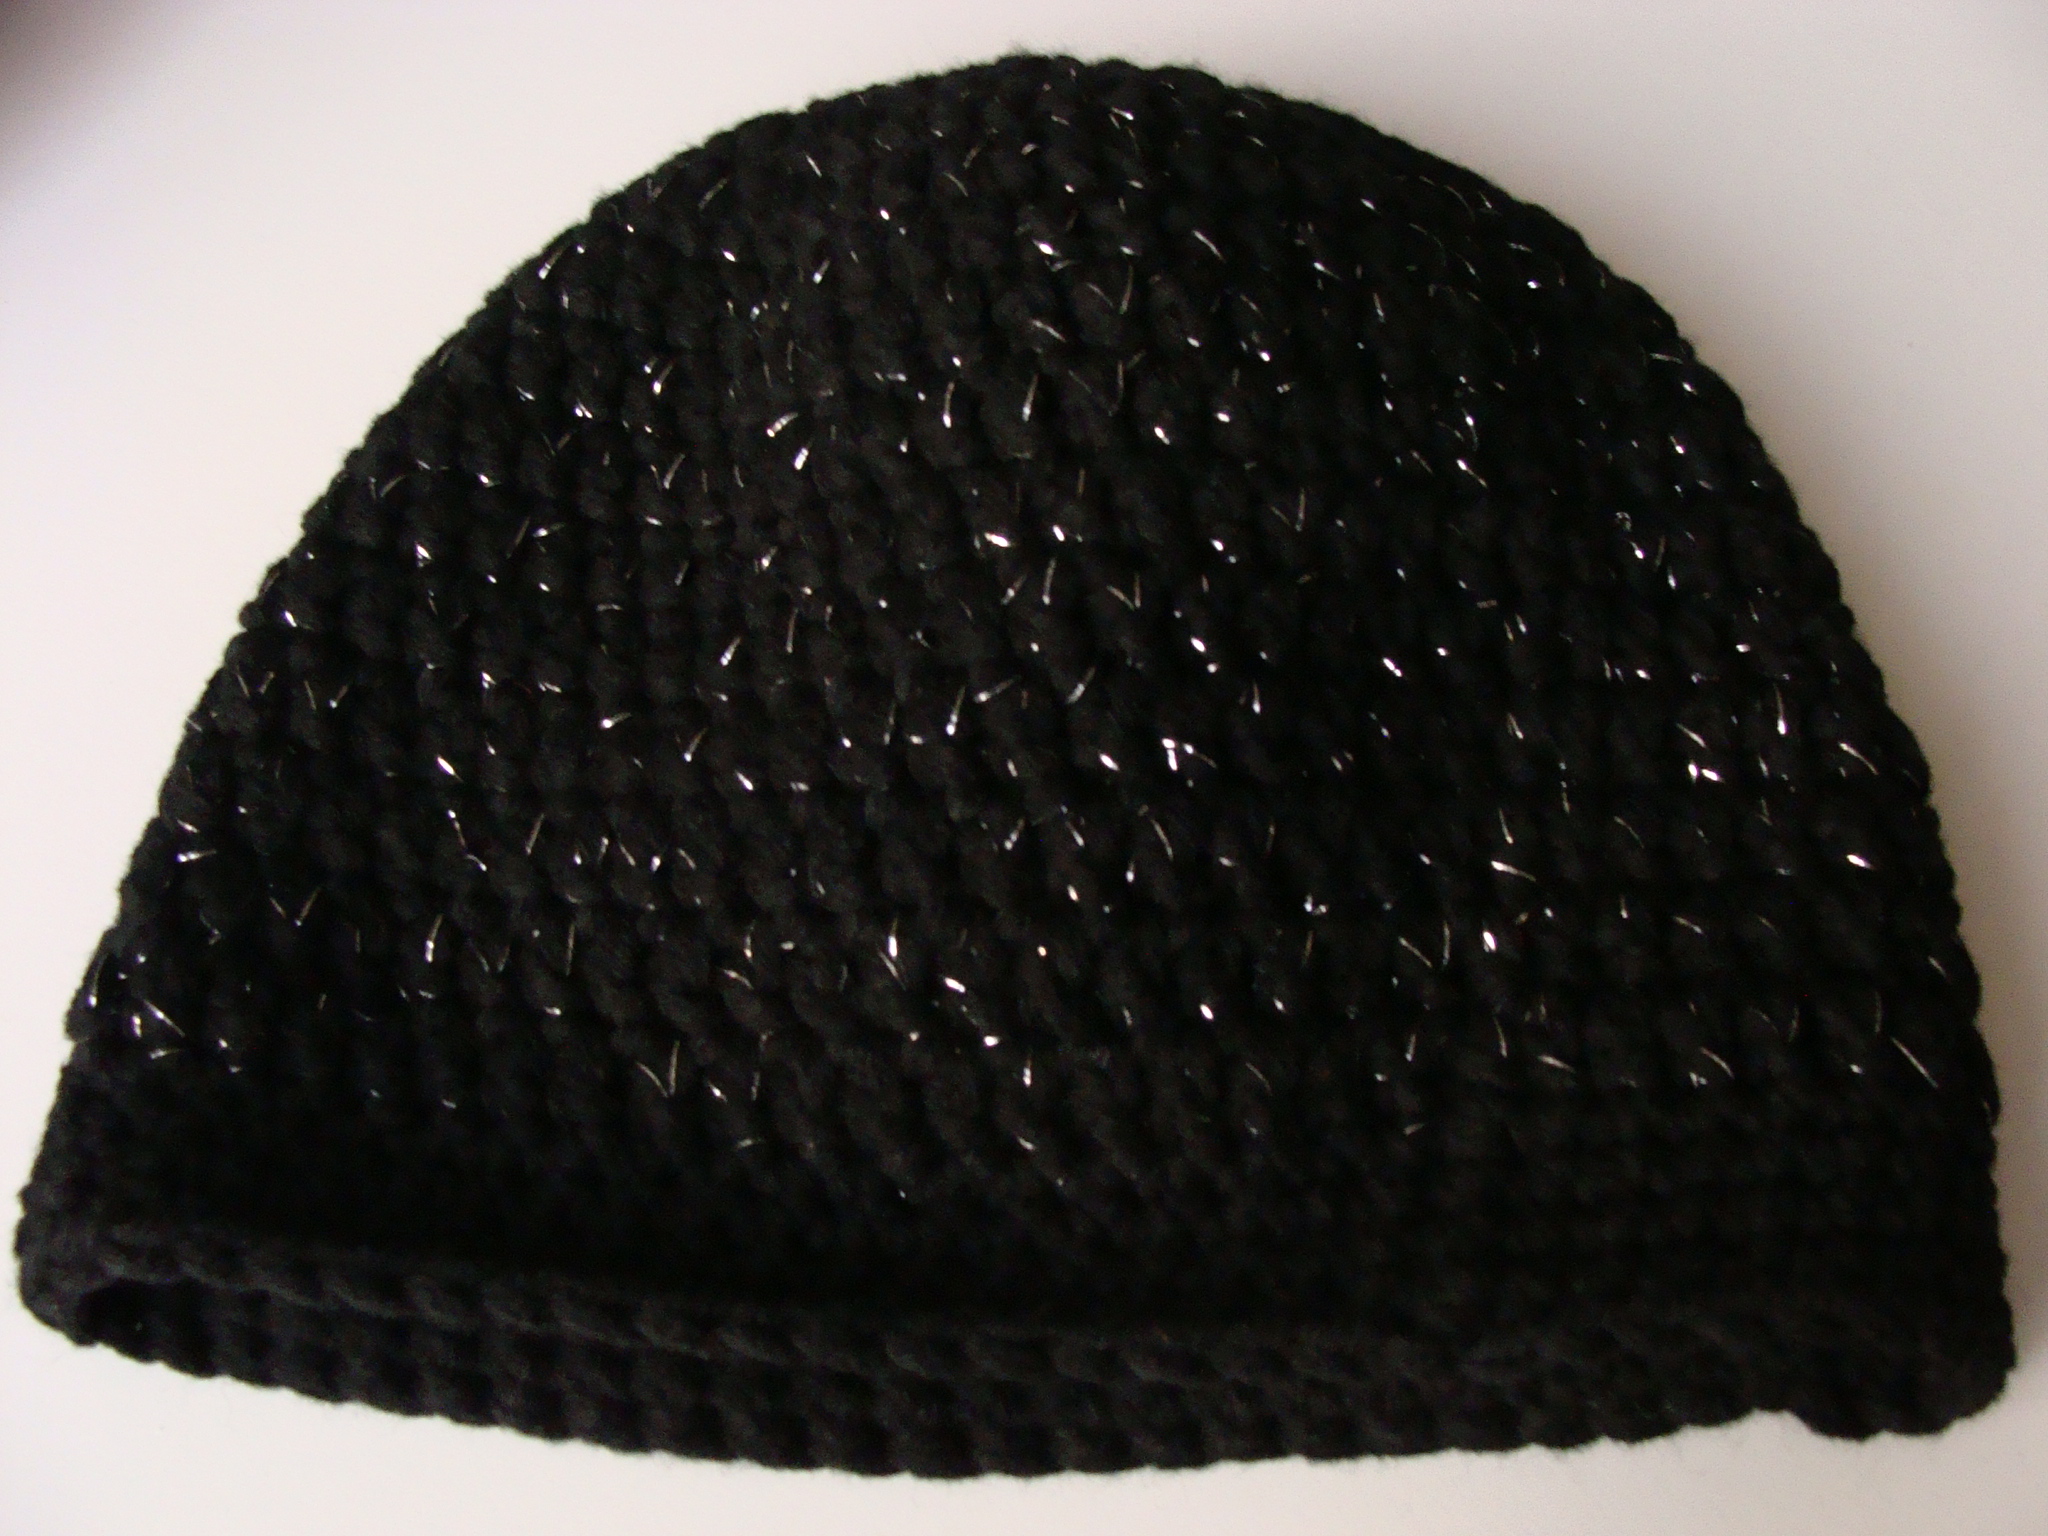 Kappe schwarz mit Silberfaden (myboshi Nr. 1), verkauft